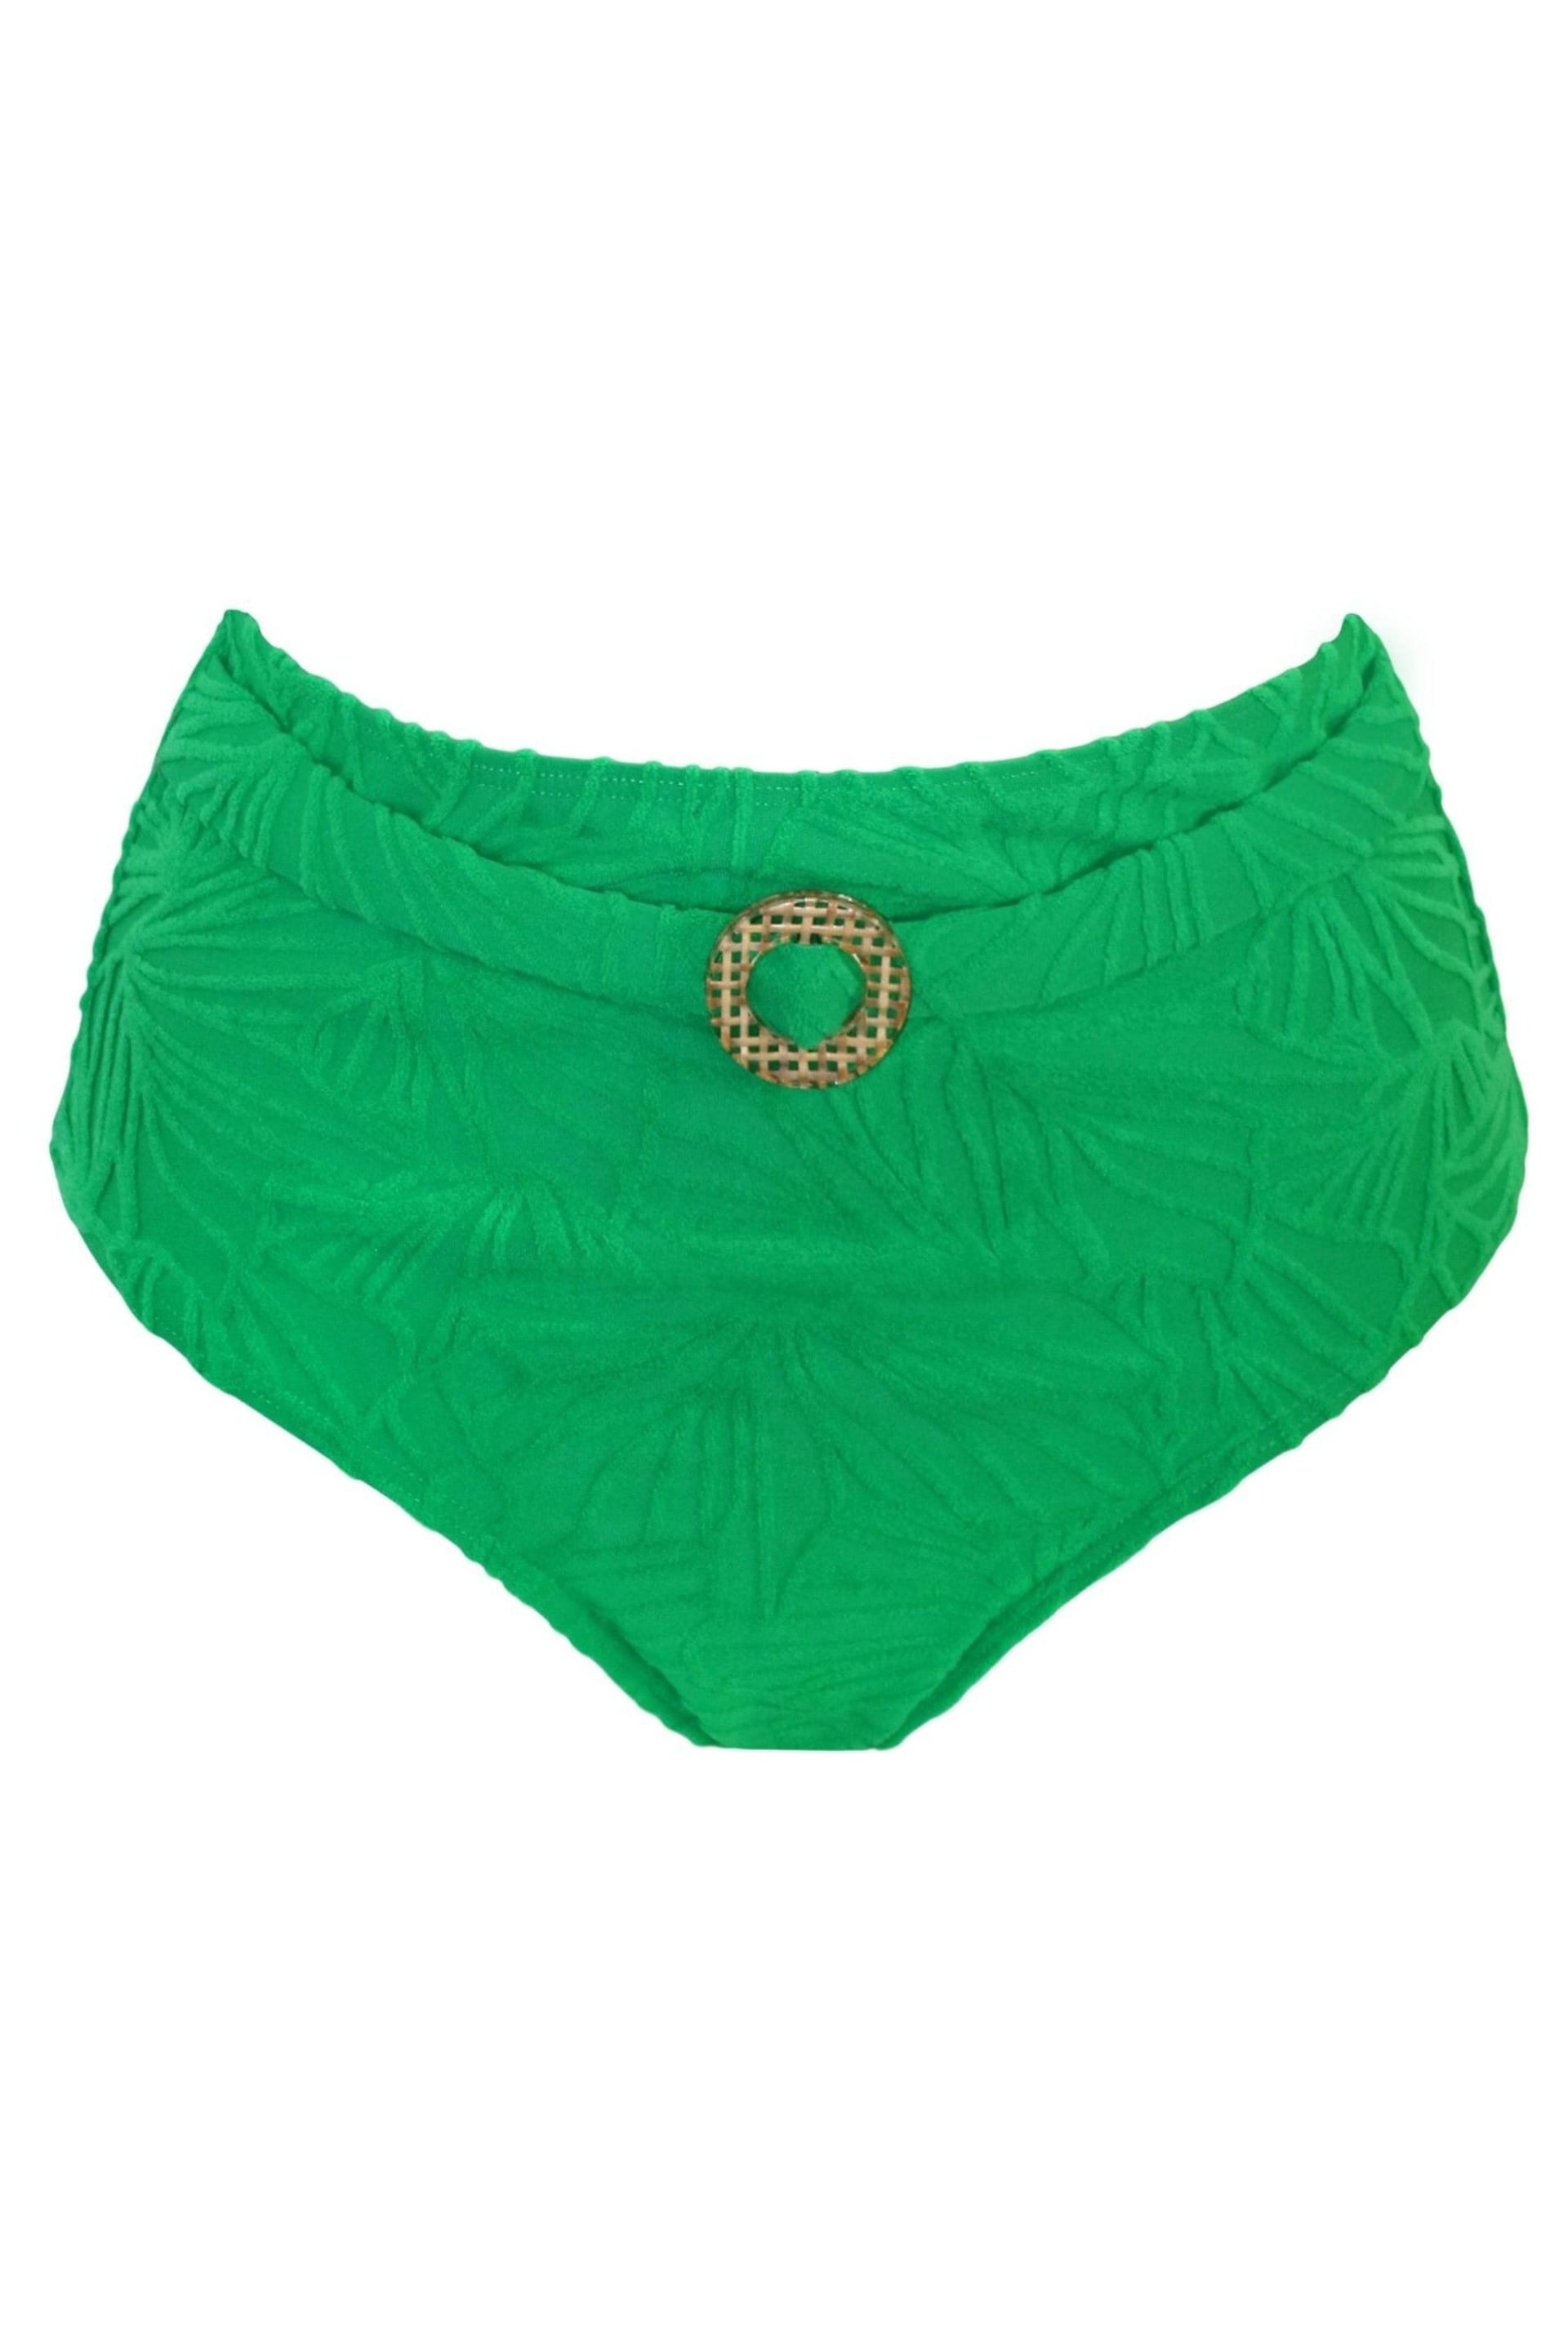 Pour Moi Green High Waist Ibiza Bikini Bottom - Image 3 of 4